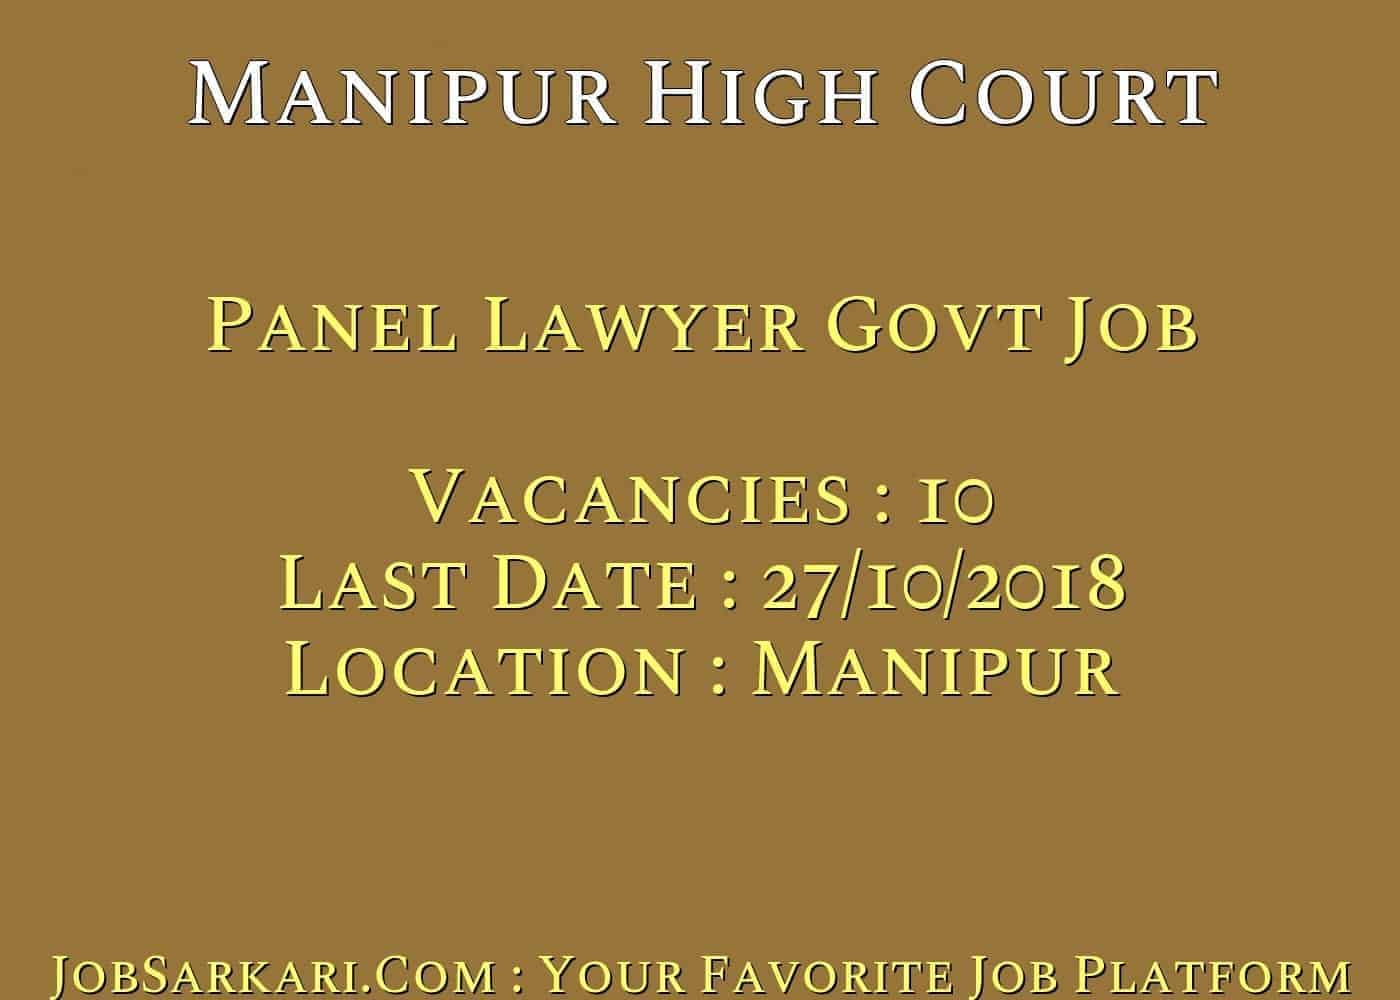 Manipur High Court Recruitment 2018 for Penal Lawyer Govt Job